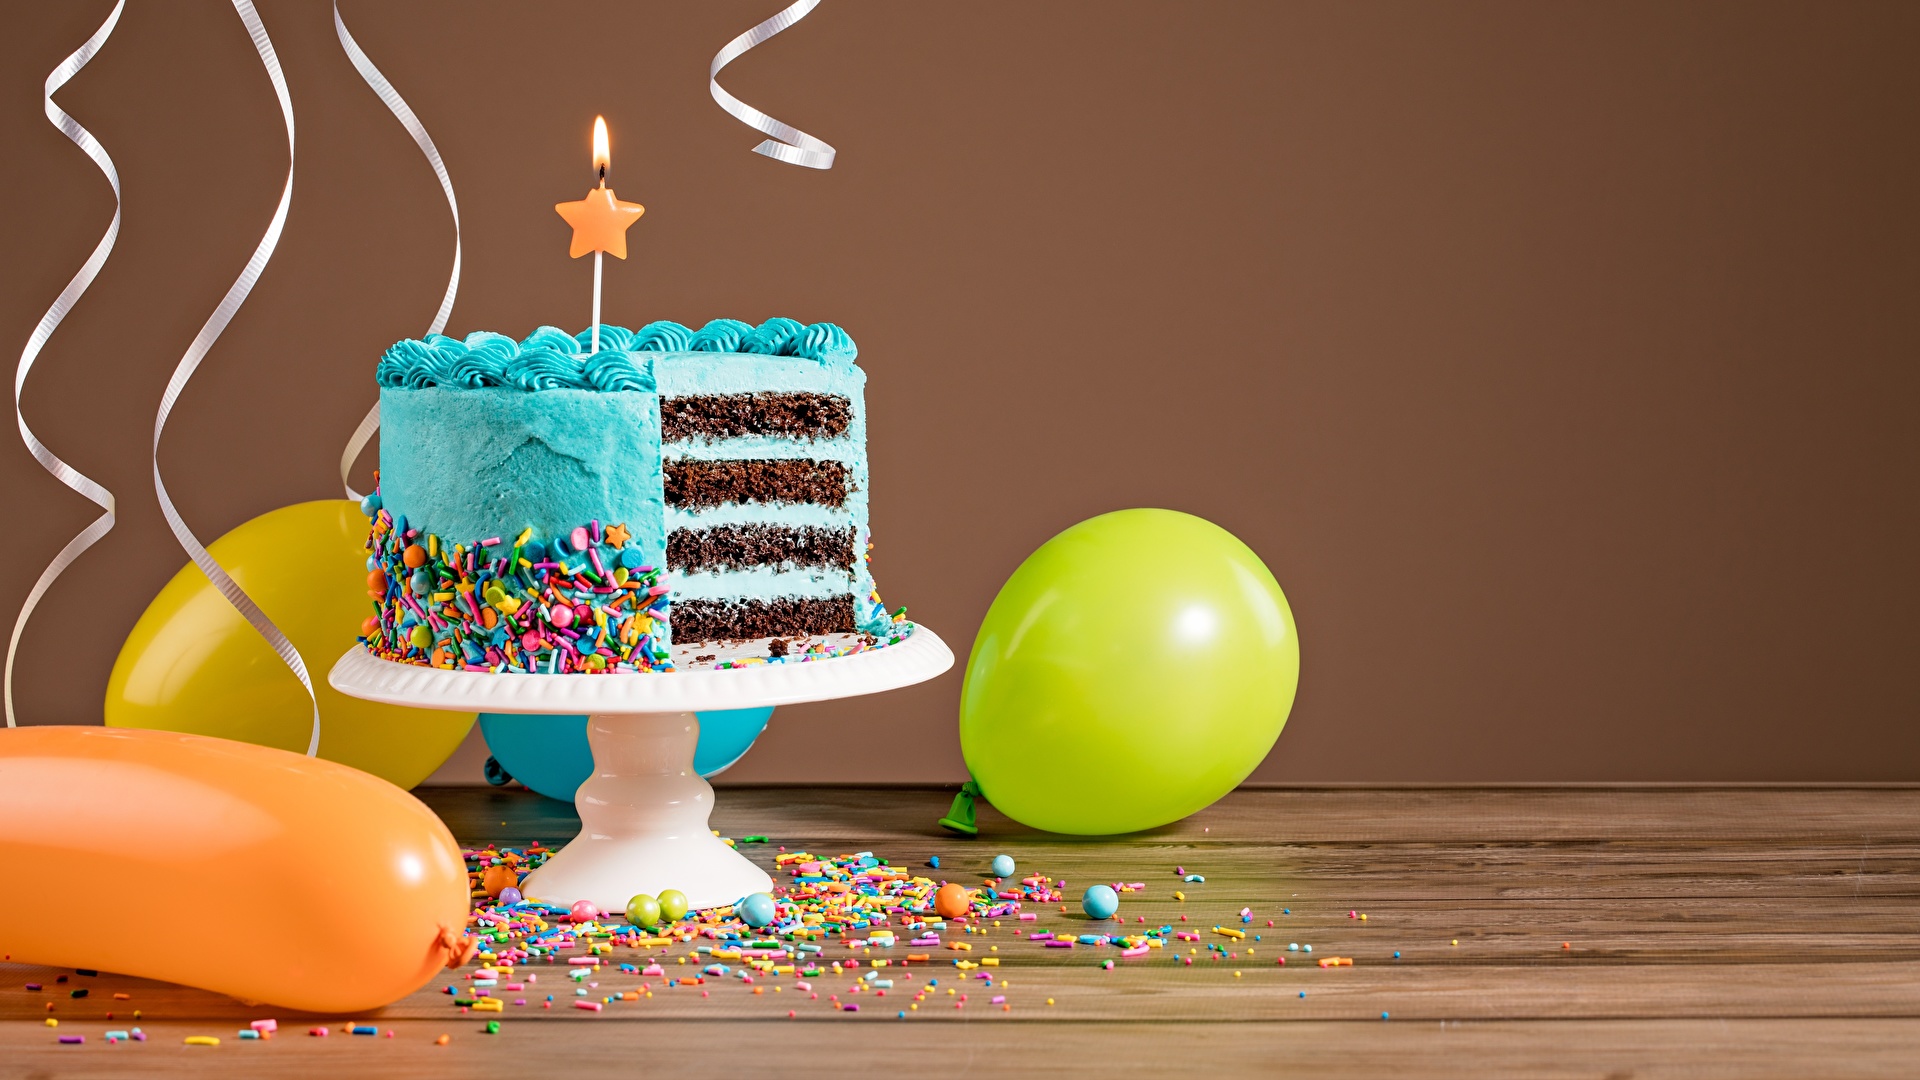 gambar balon dan kue ulang tahun